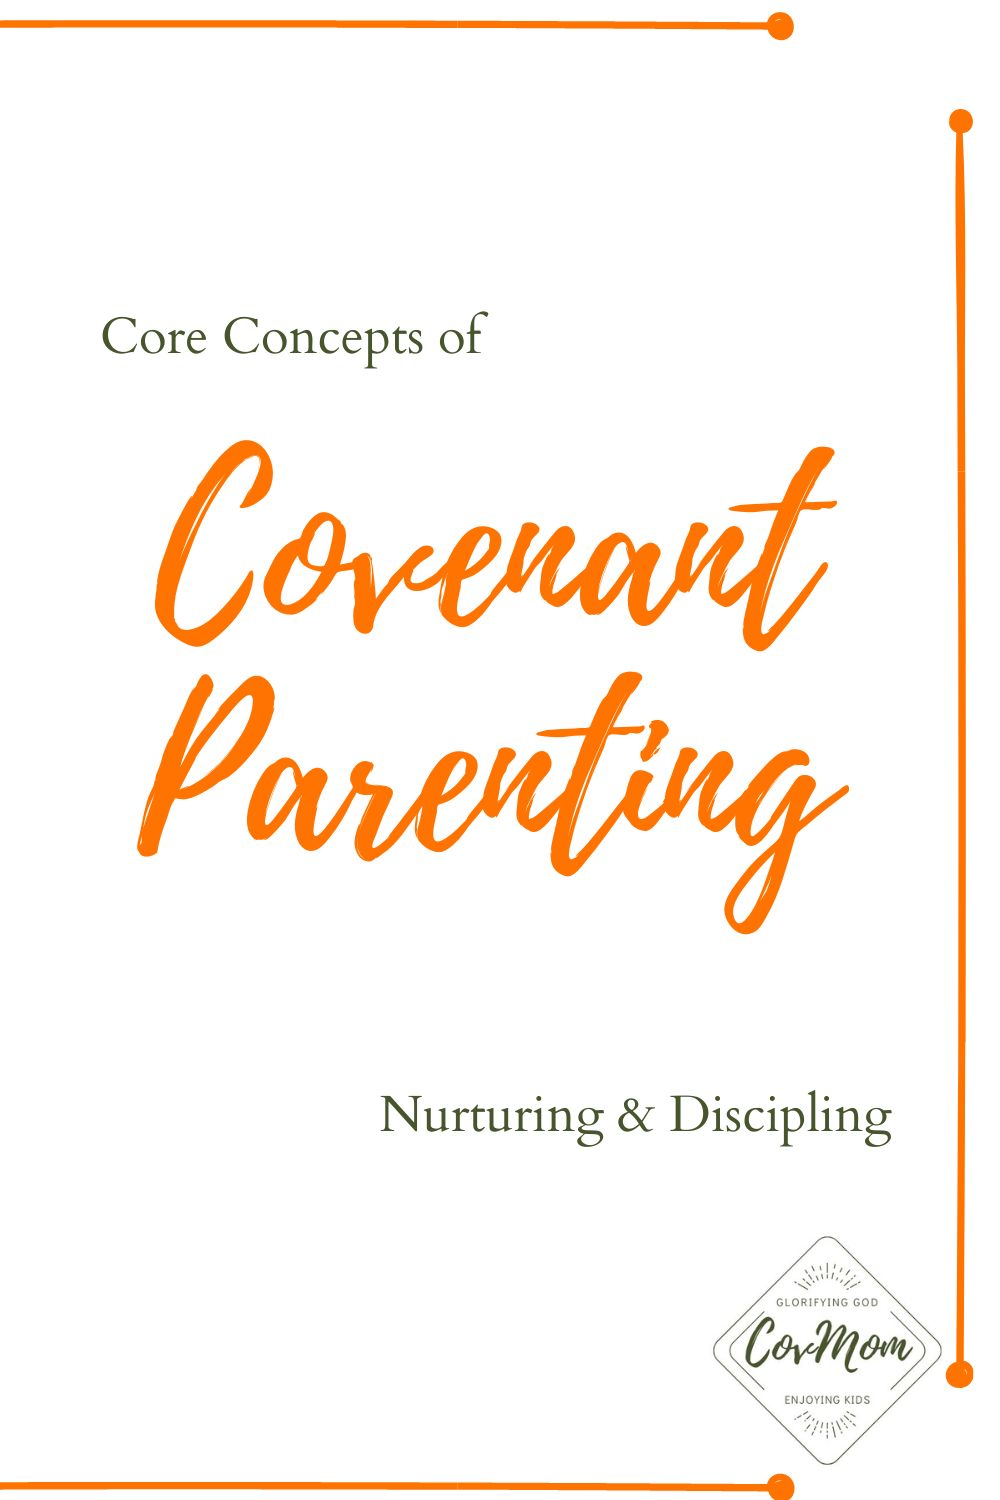 Core Concepts of Covenant Parenting